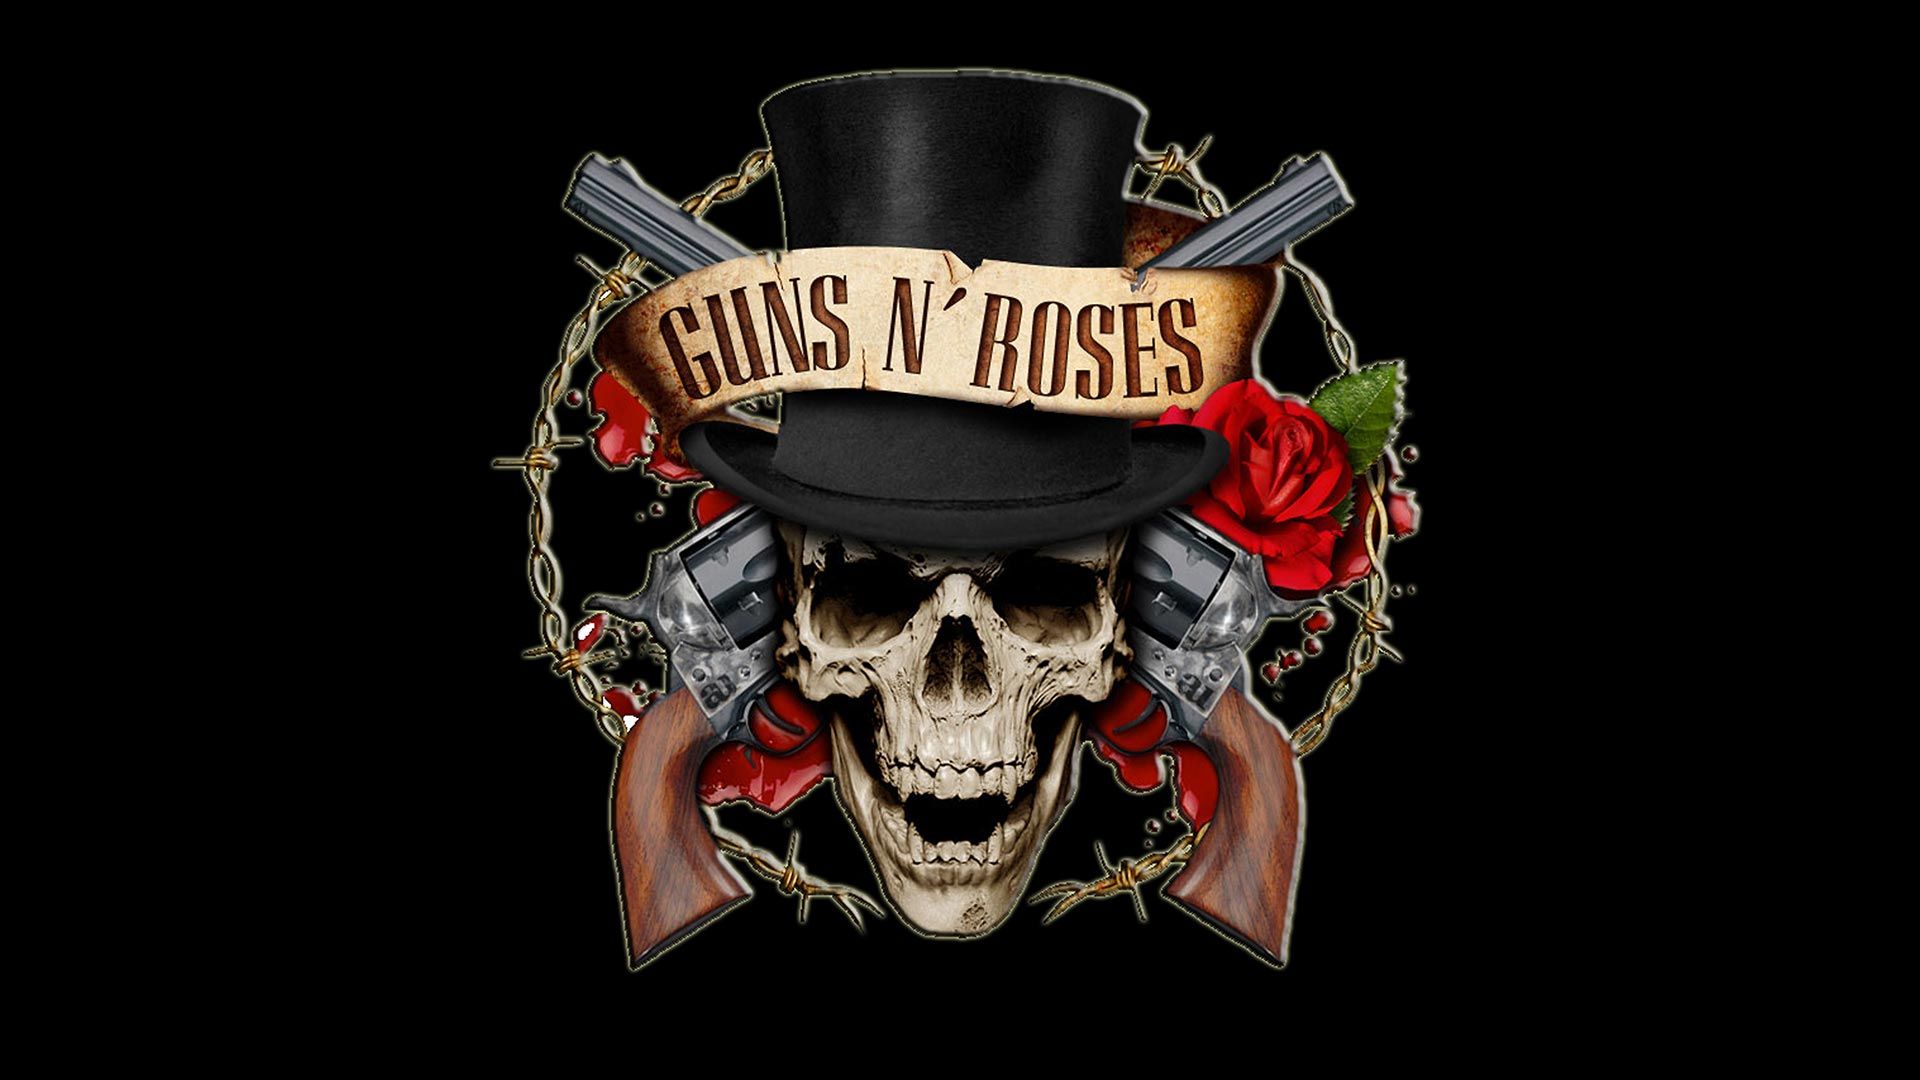 Free download Guns N Roses Theme for Windows 10 8 7 1920x1080